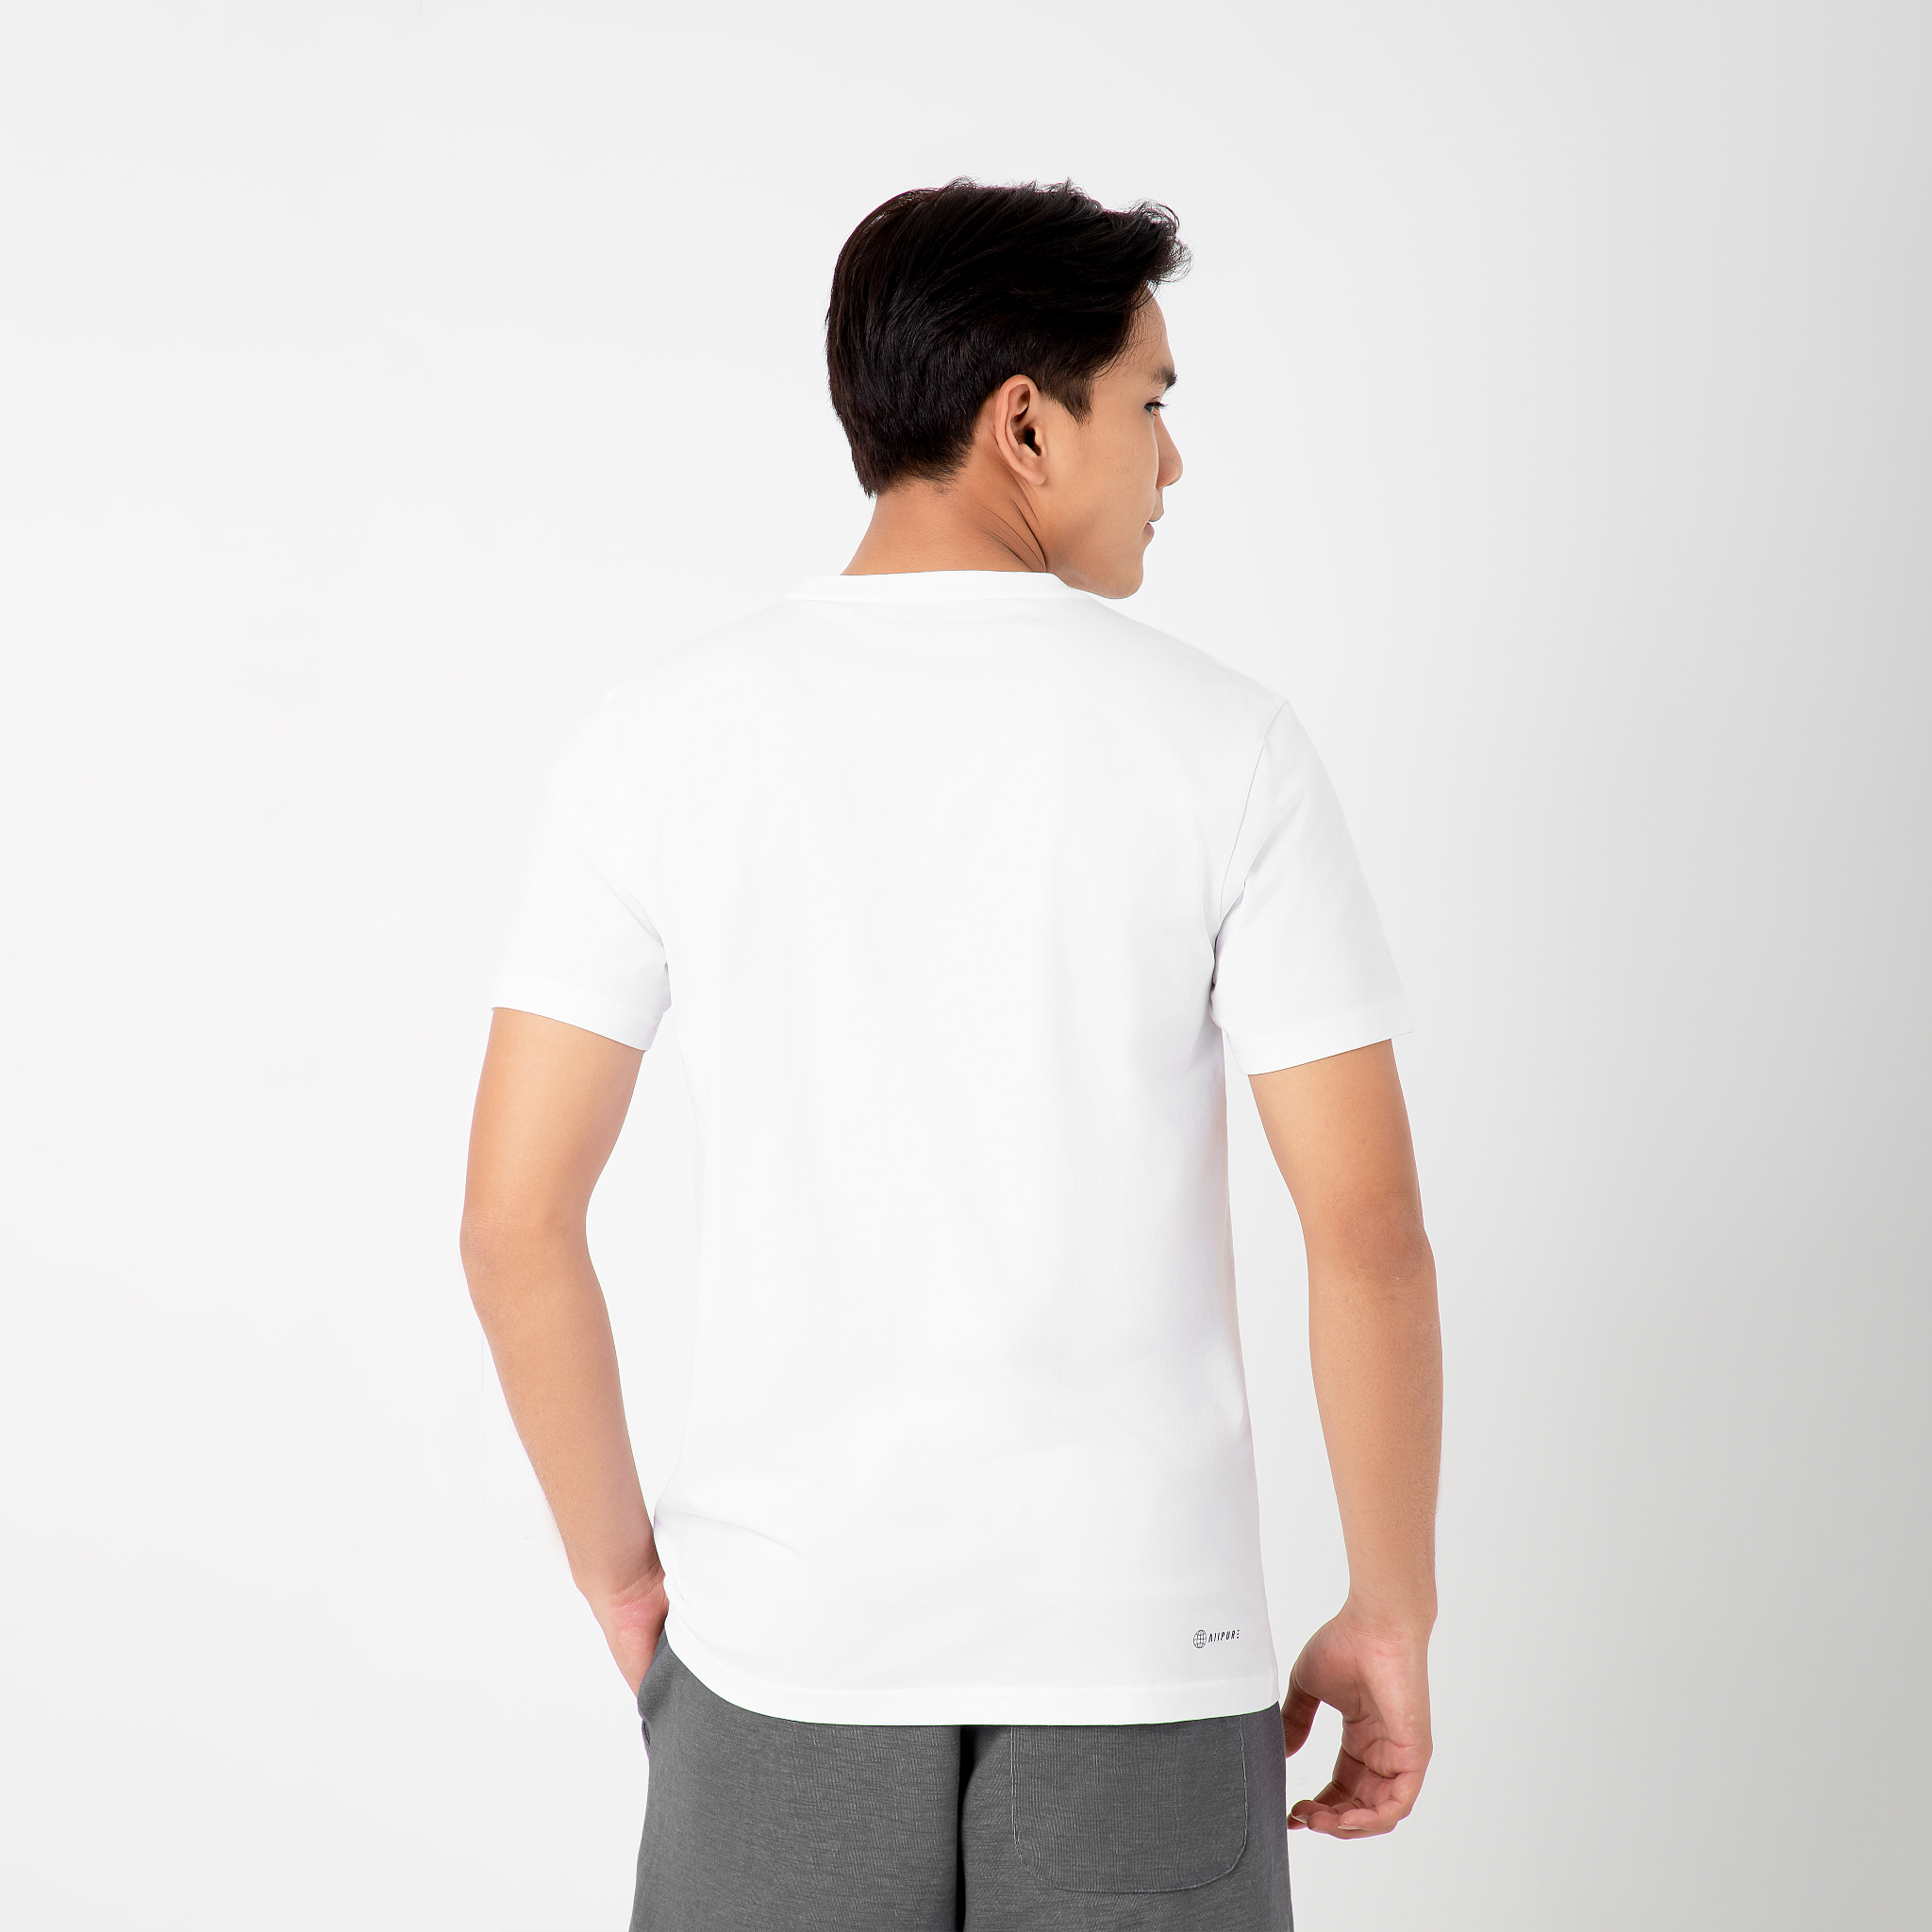  Áo thun cotton ALLPURE Basic T-Shirt- White 